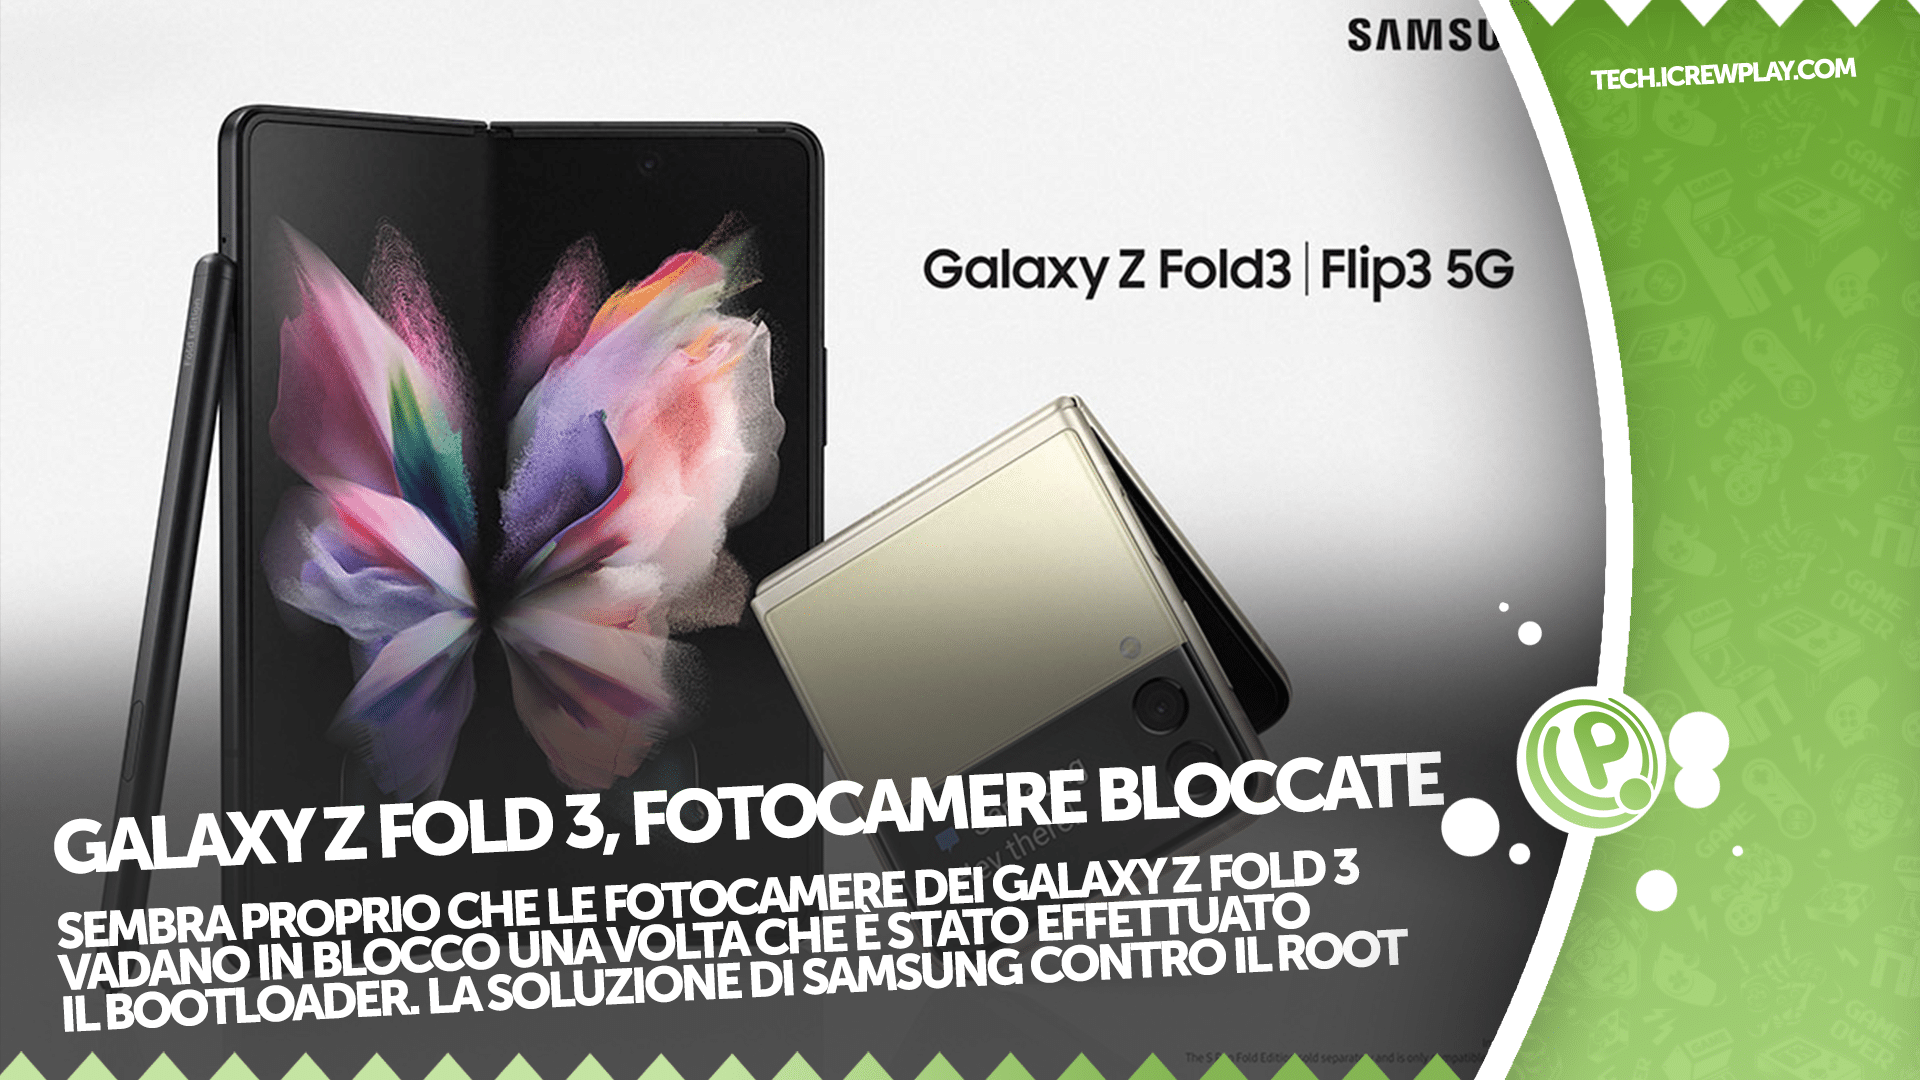 Fotocamere Galaxy Z Fold 3